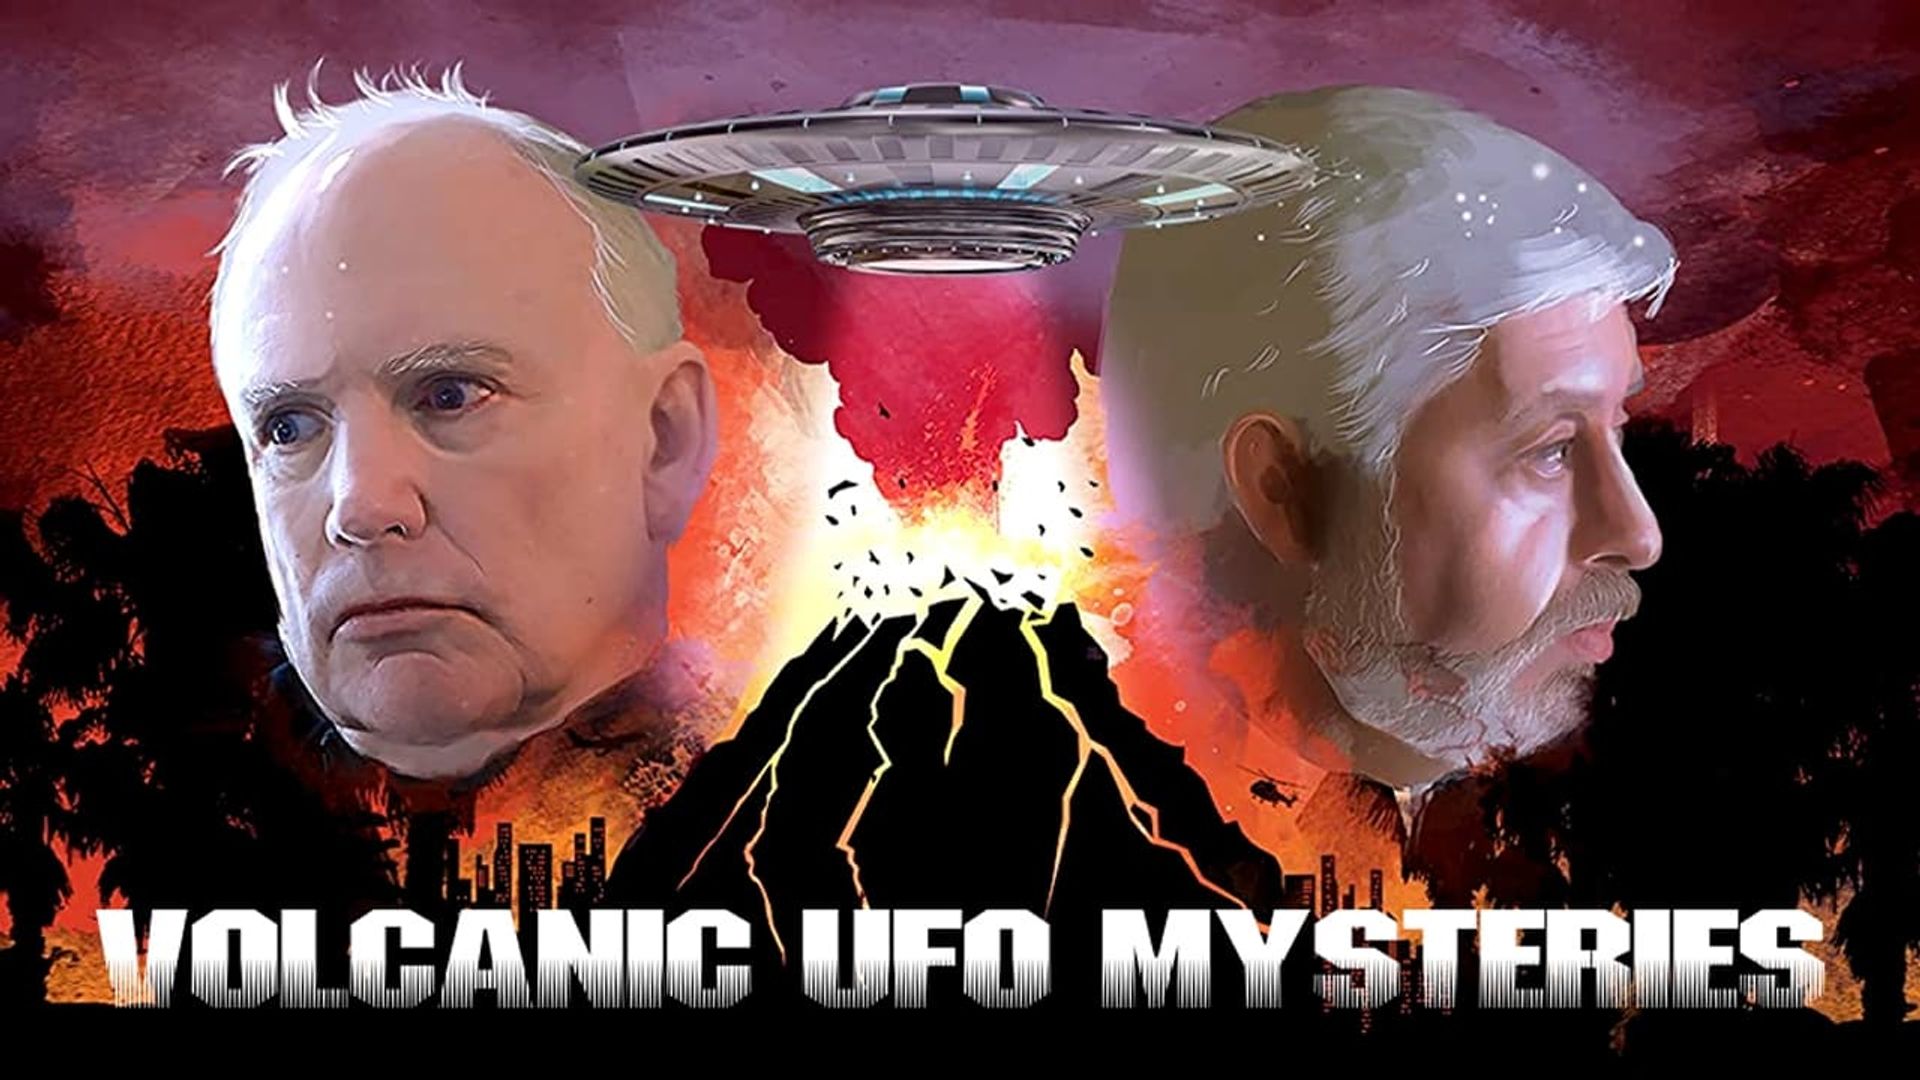 Volcanic UFO Mysteries background